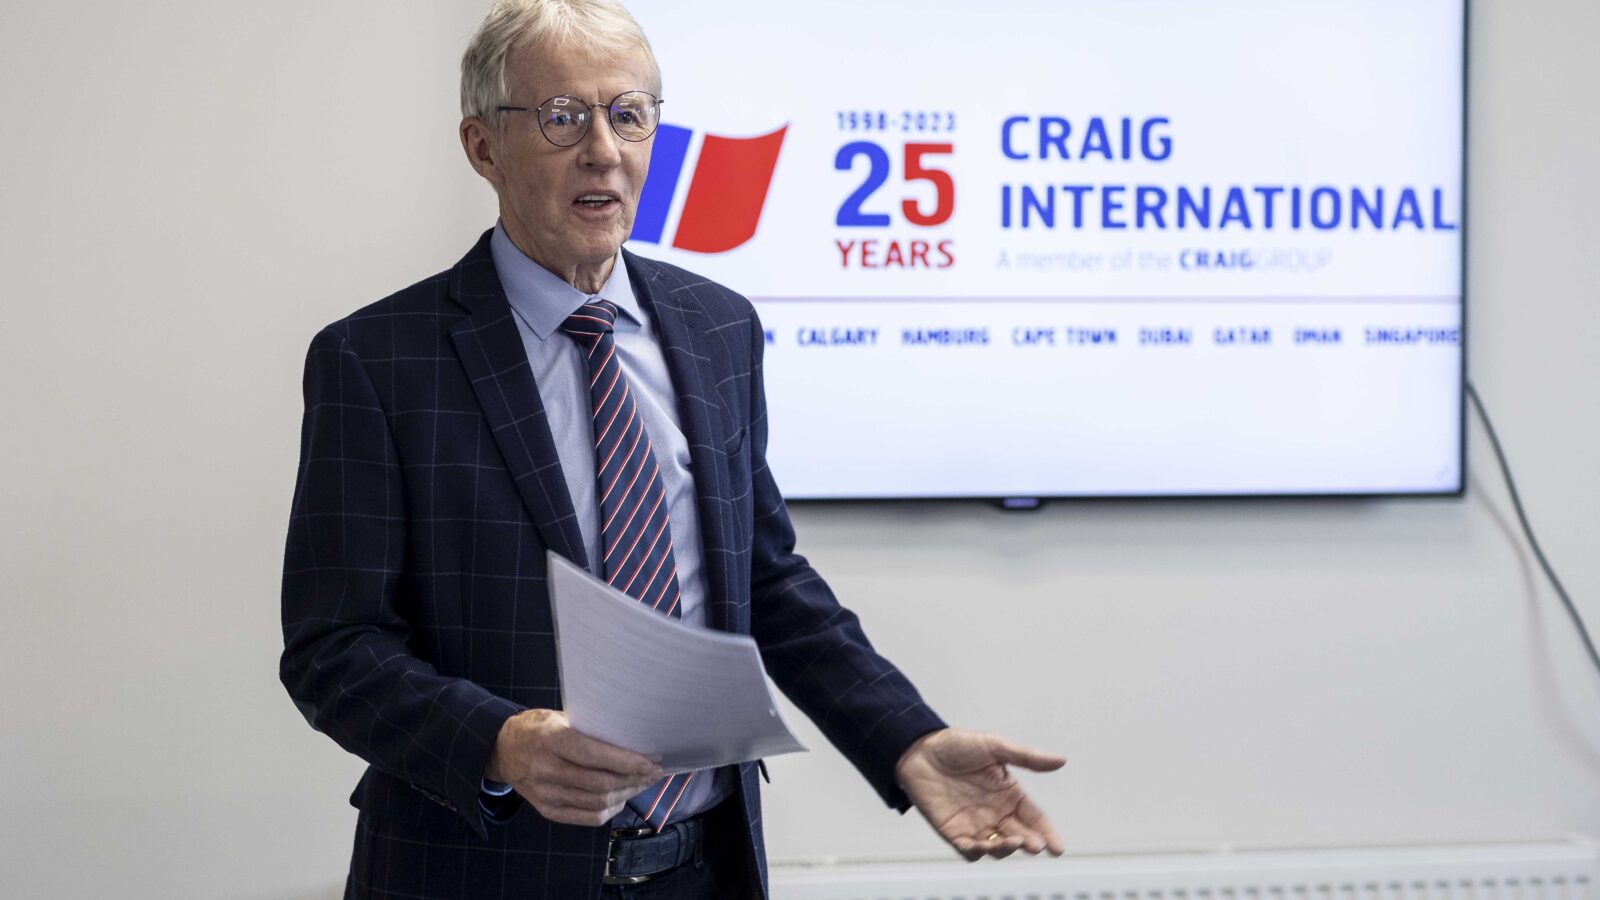 Douglas Craig at the opening of Craig International’s new HQ